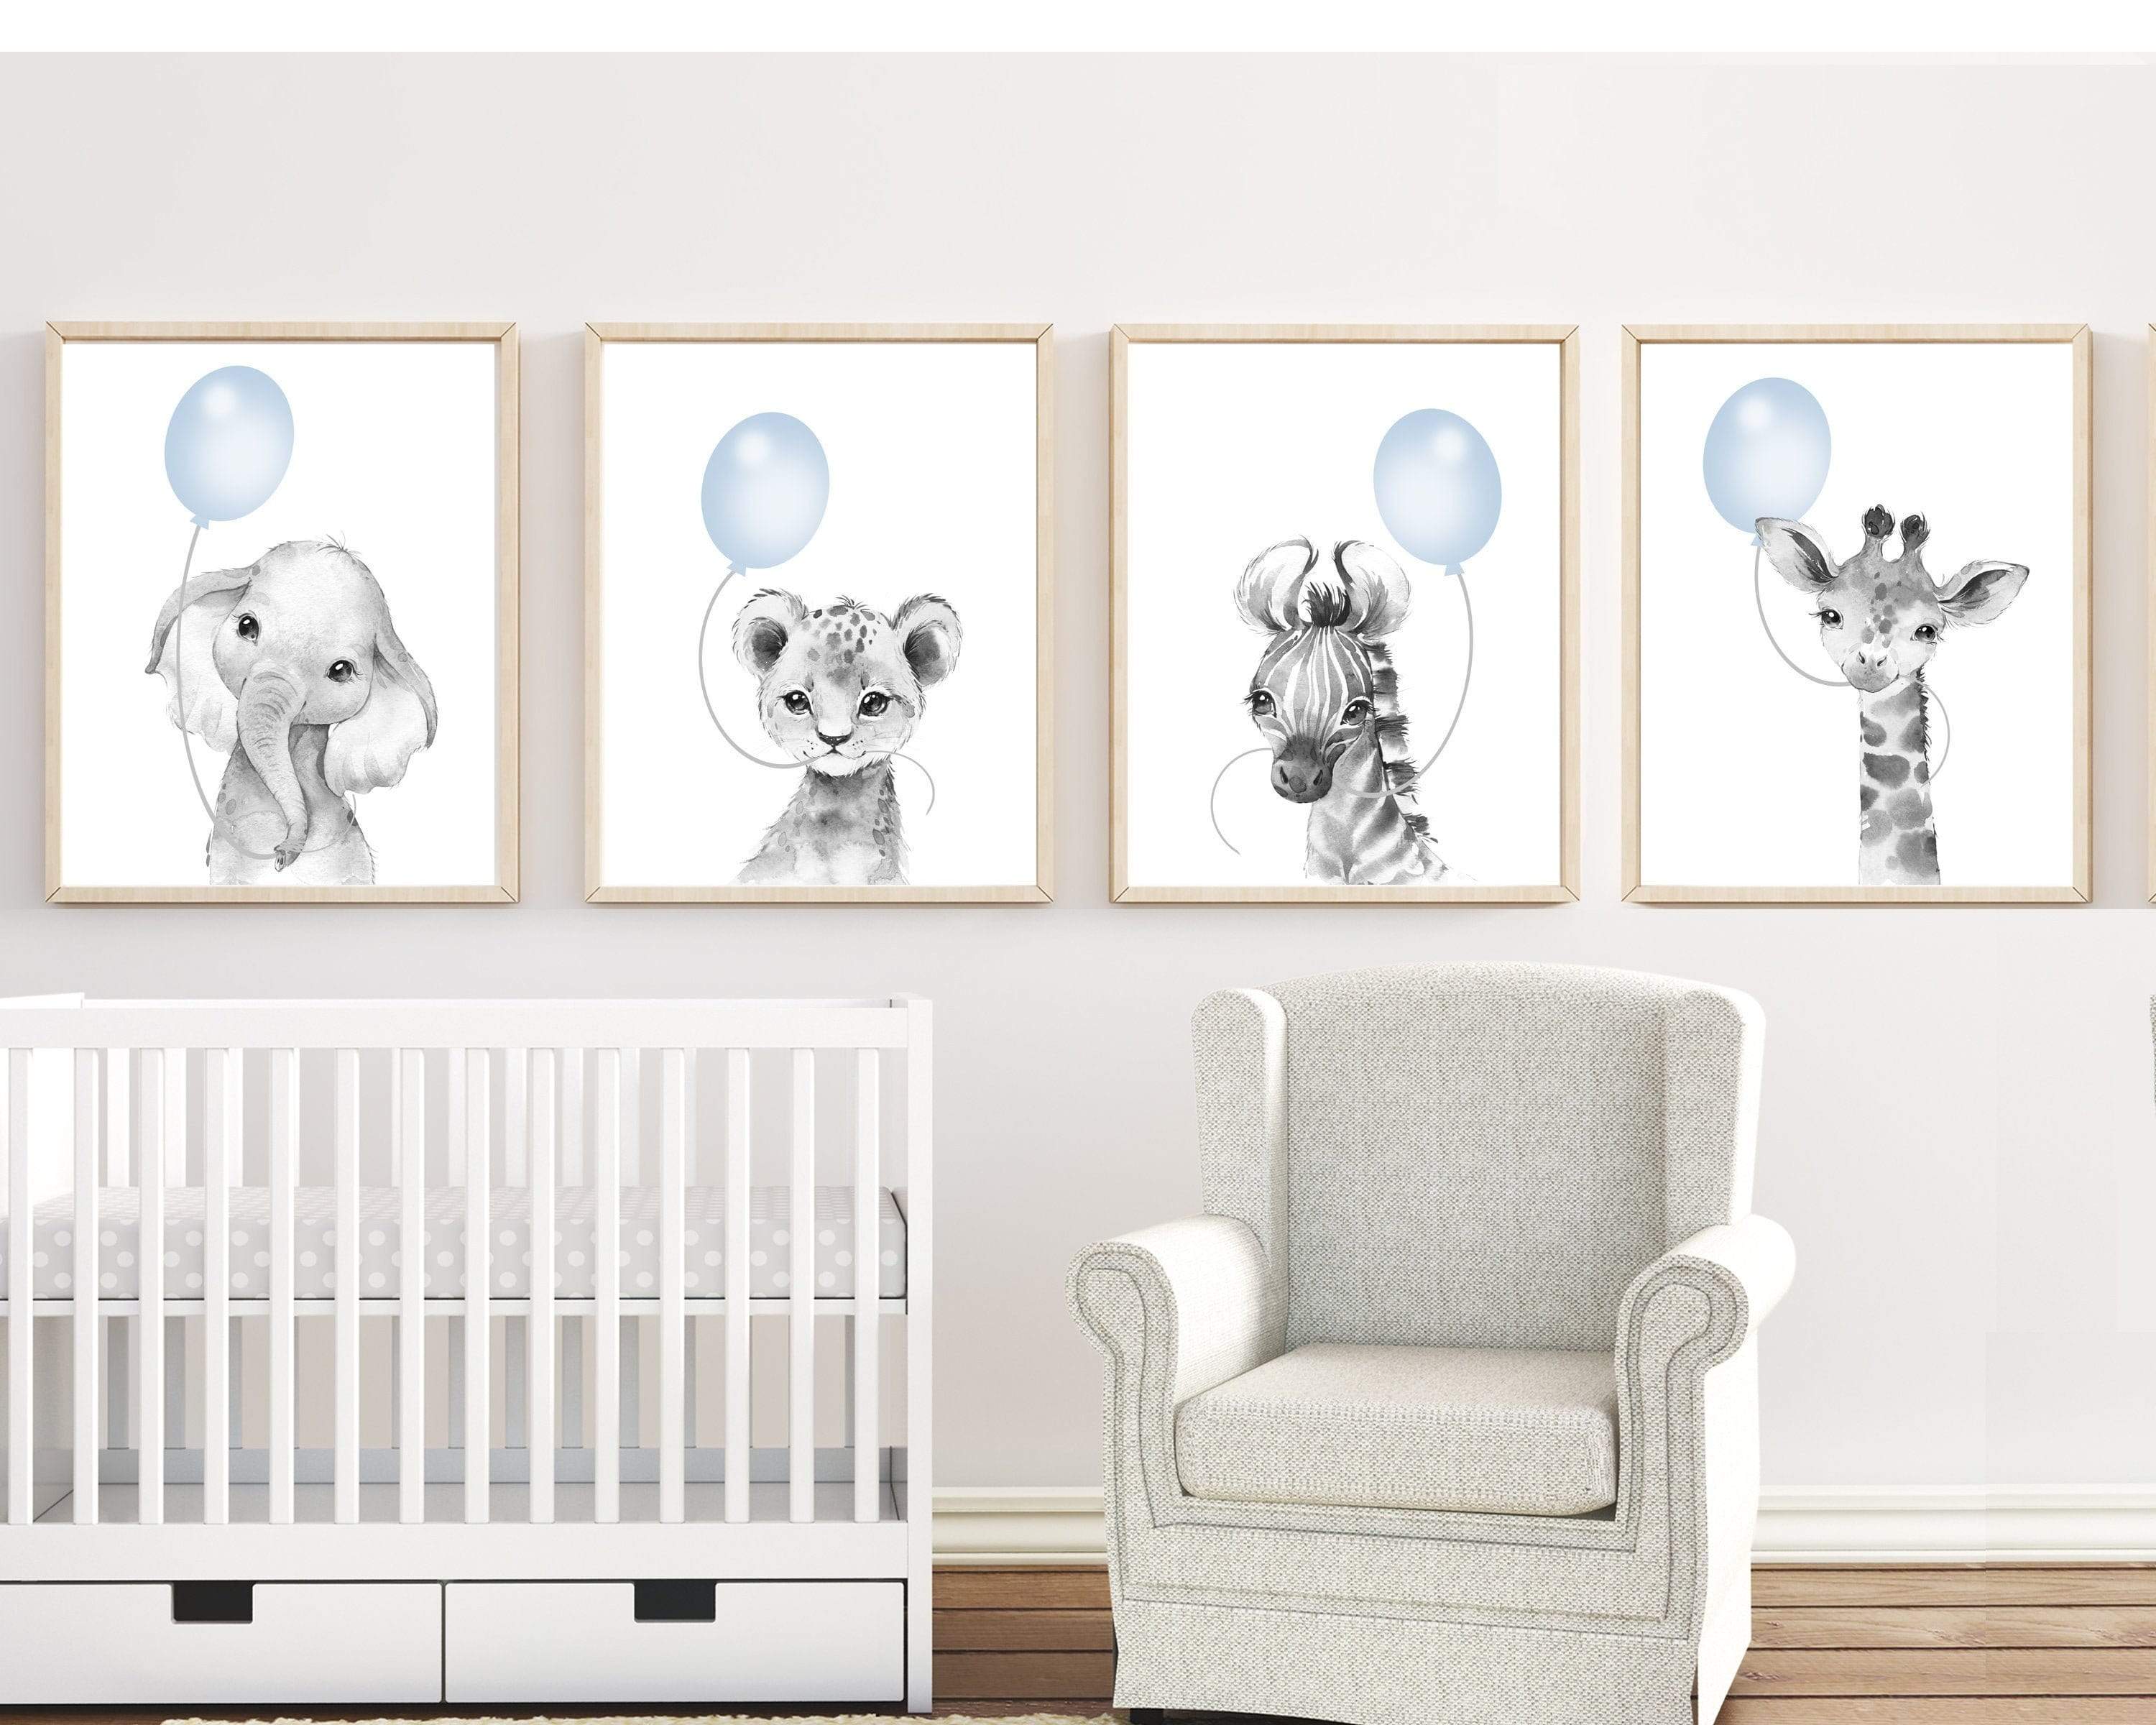 Black and White Baby Safari Animals with balloons wall art | set of 4 prints nursery art print baby nursery bedroom decor